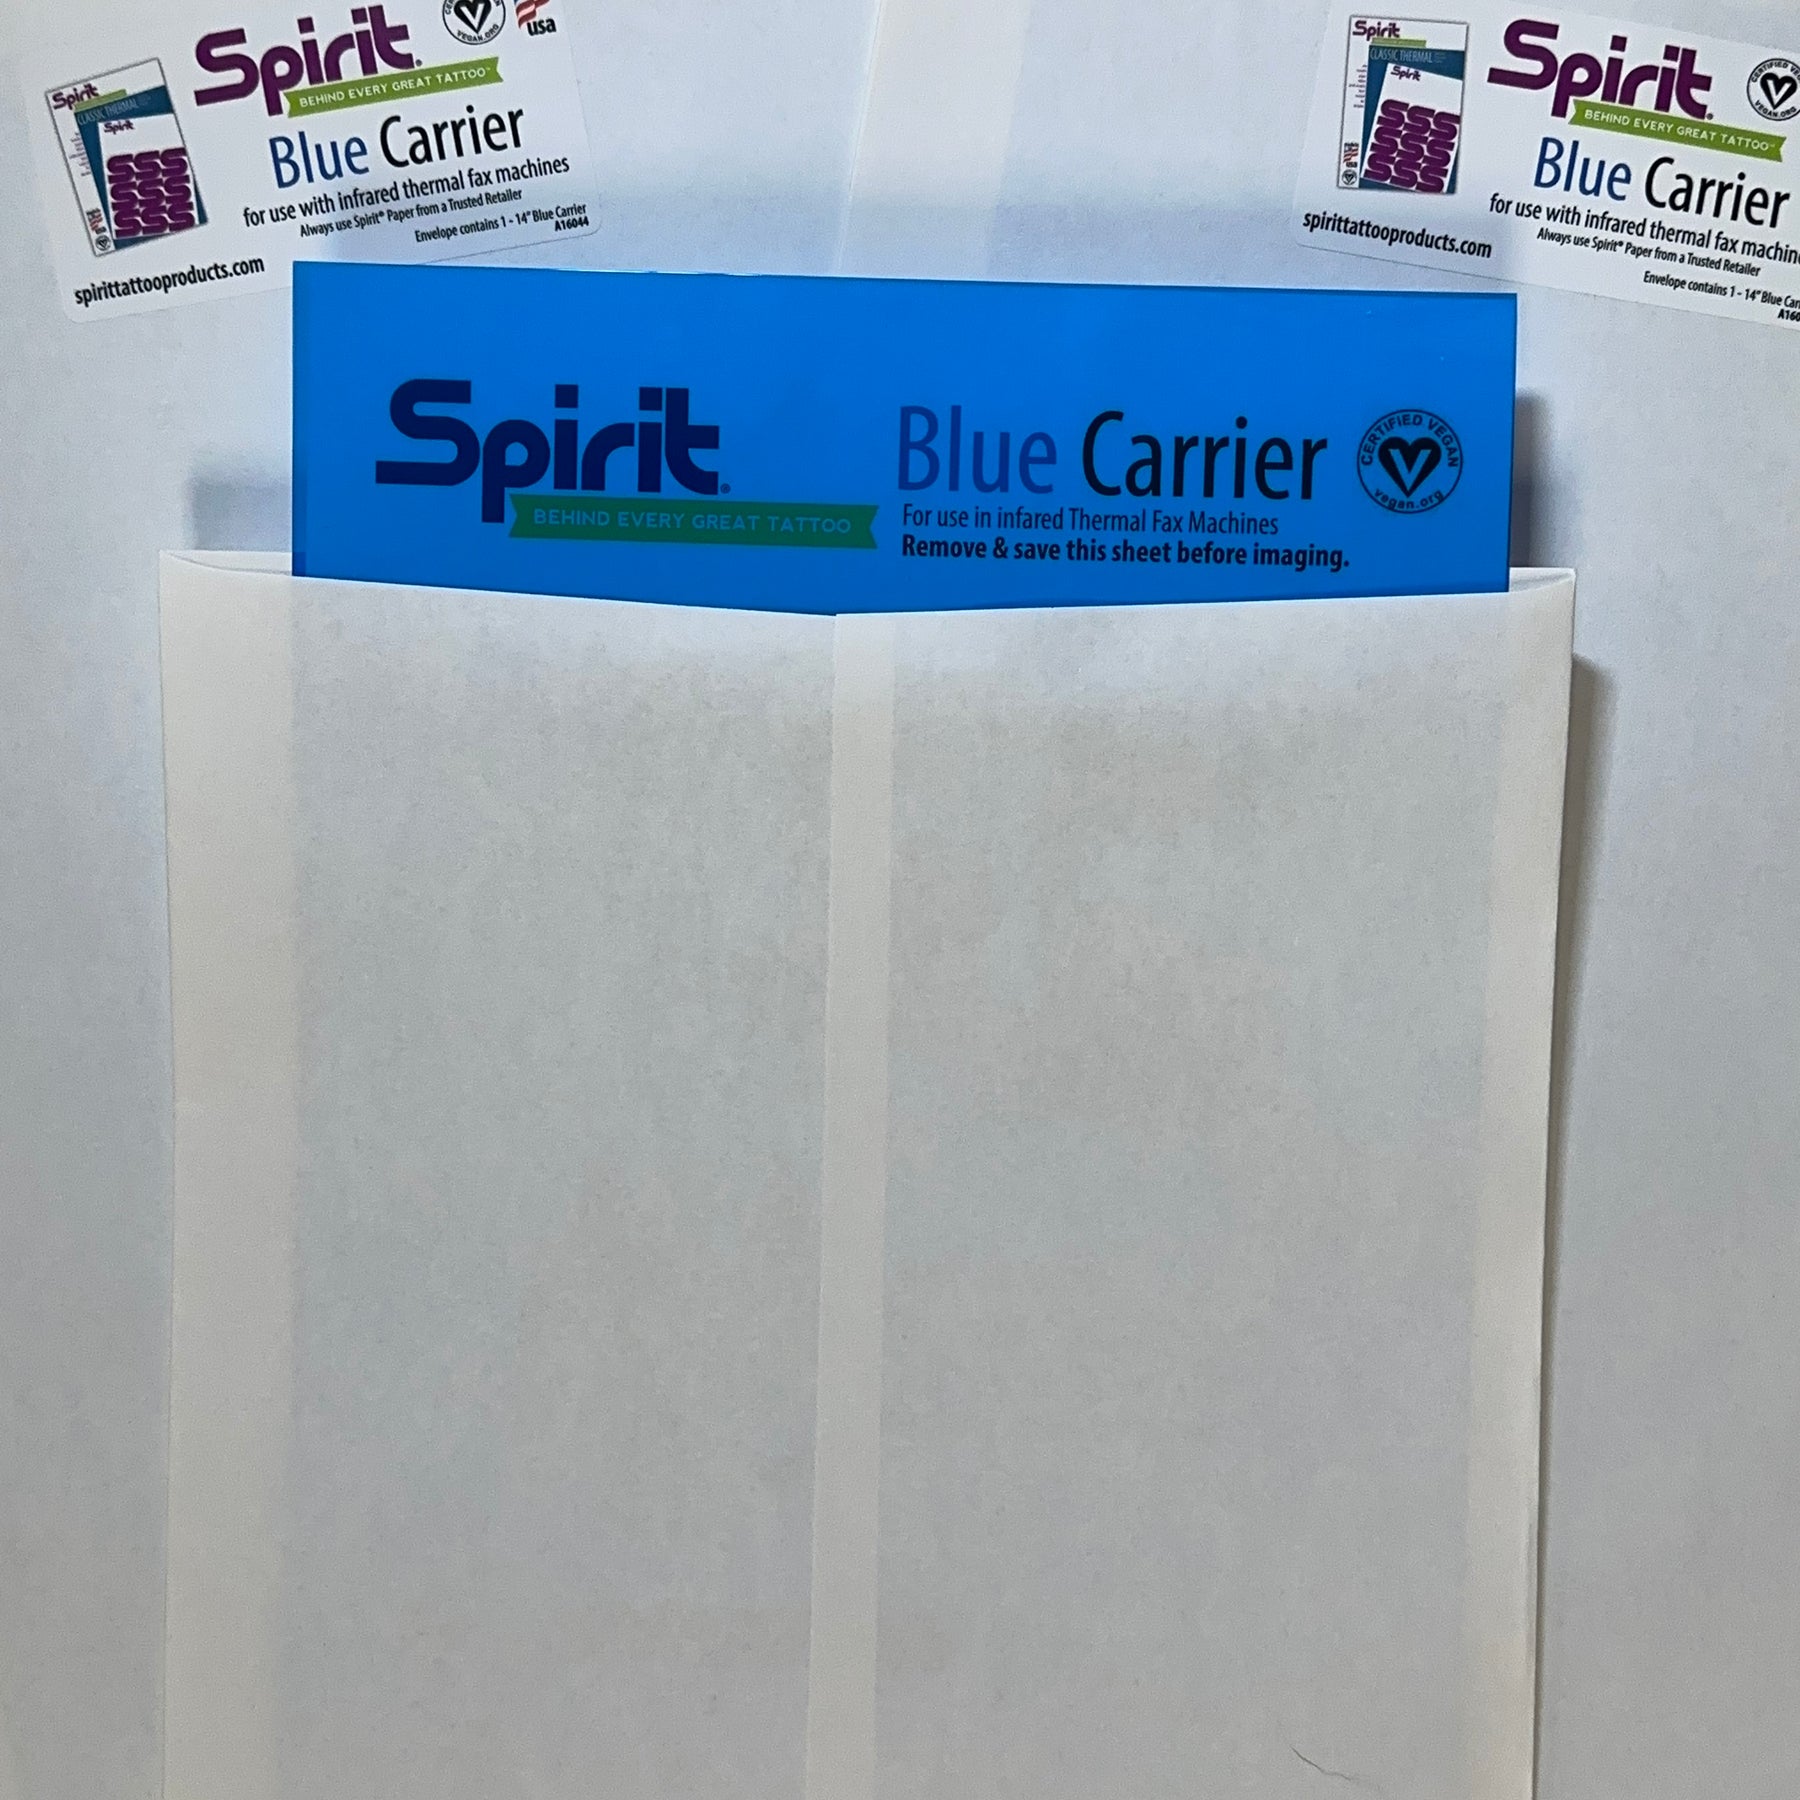 Spirit Thermal Paper - 8.5 x 14